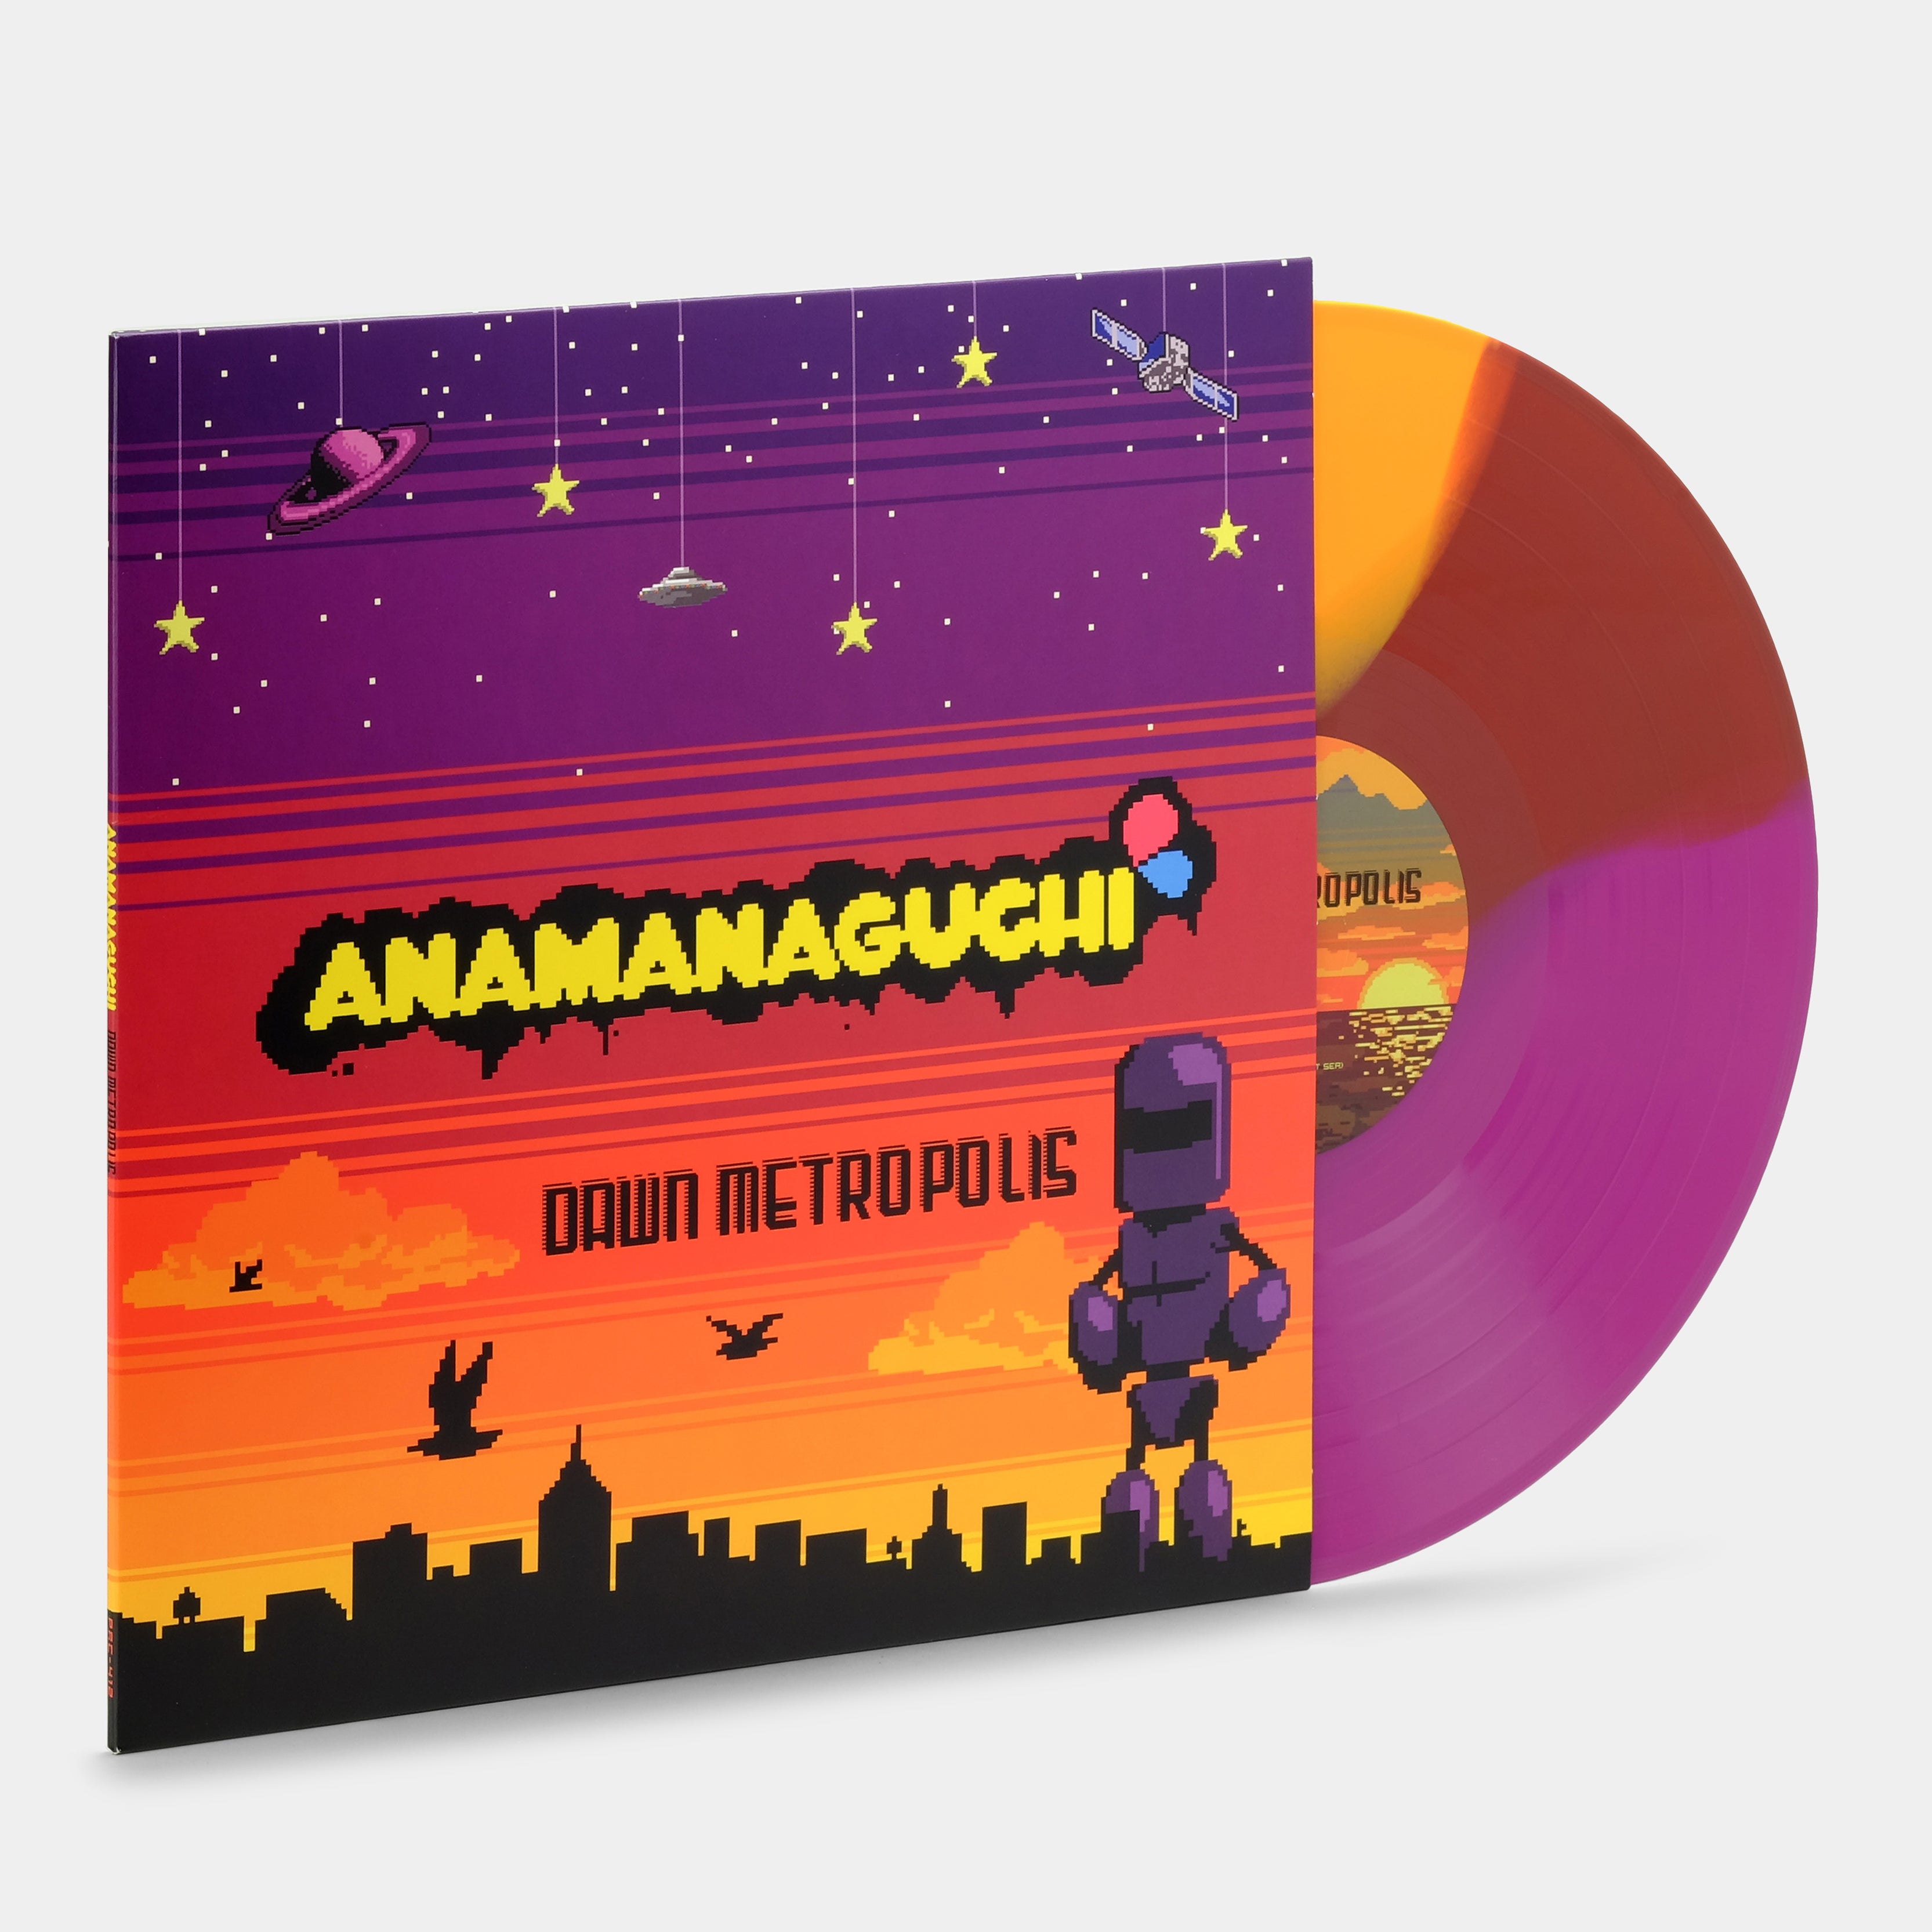 Anamanaguchi - Dawn Metropolis LP Orange, Maroon & Purple Vinyl Record